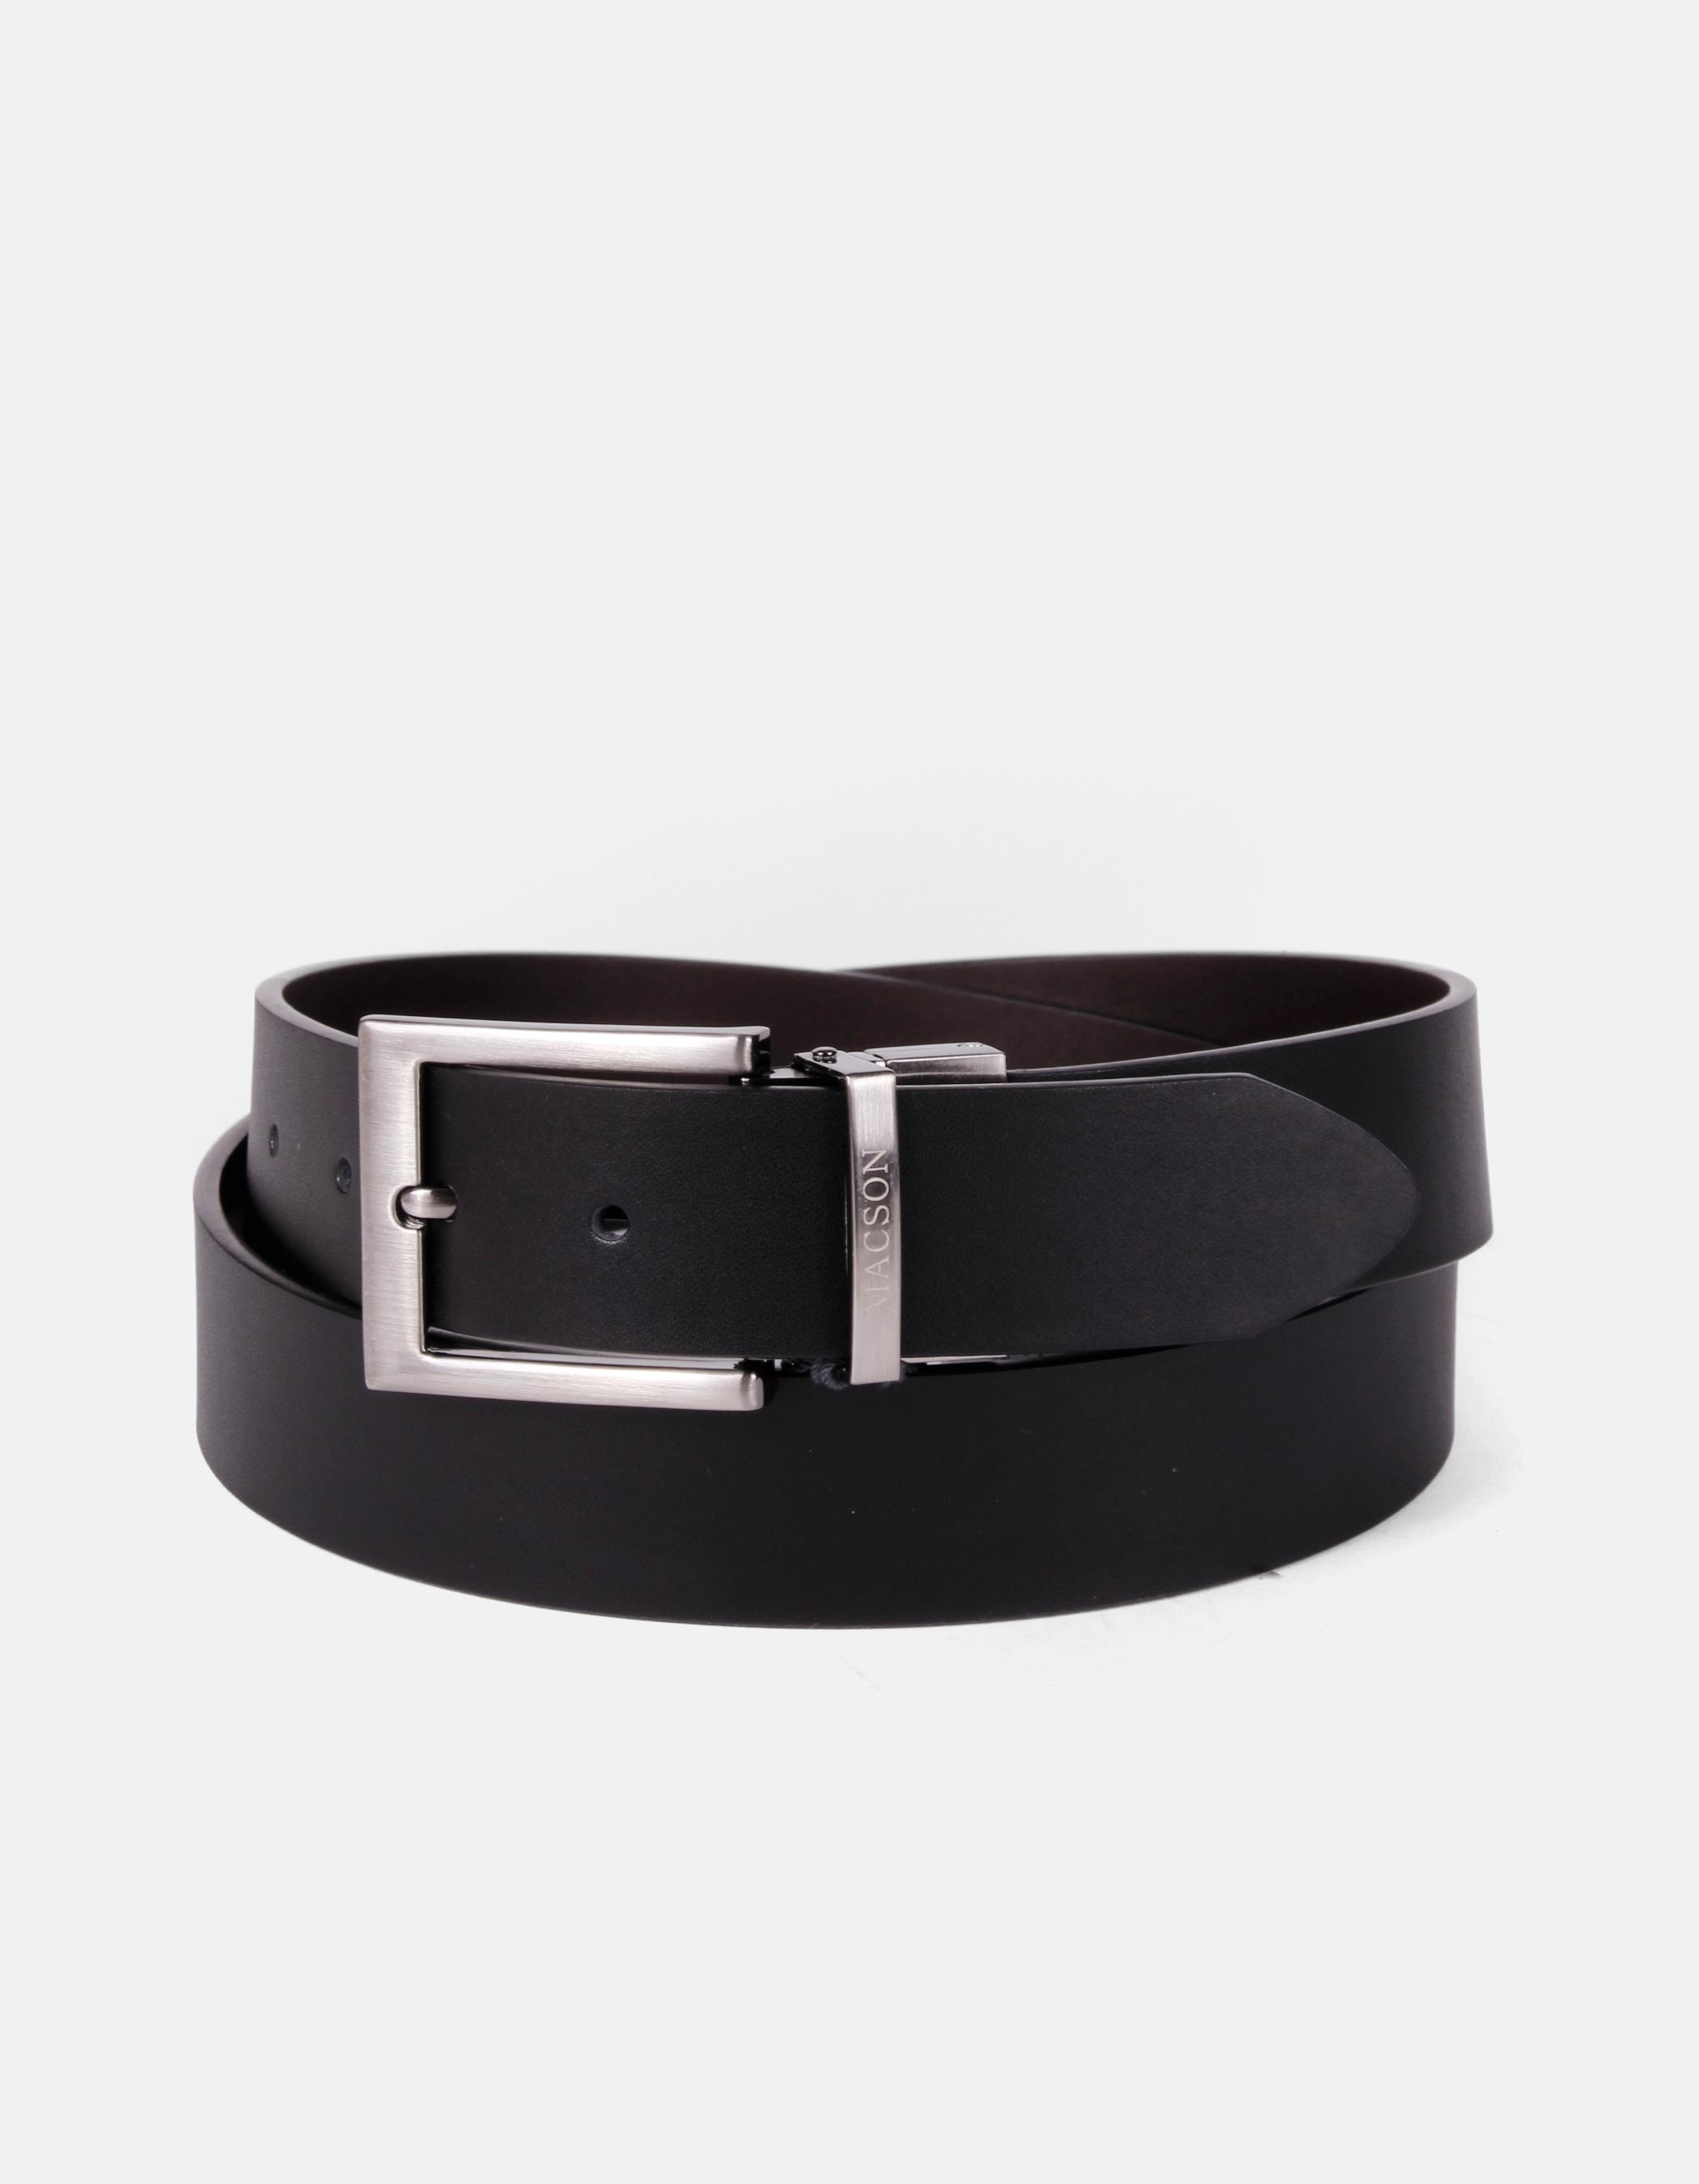 Black dress reversible belt